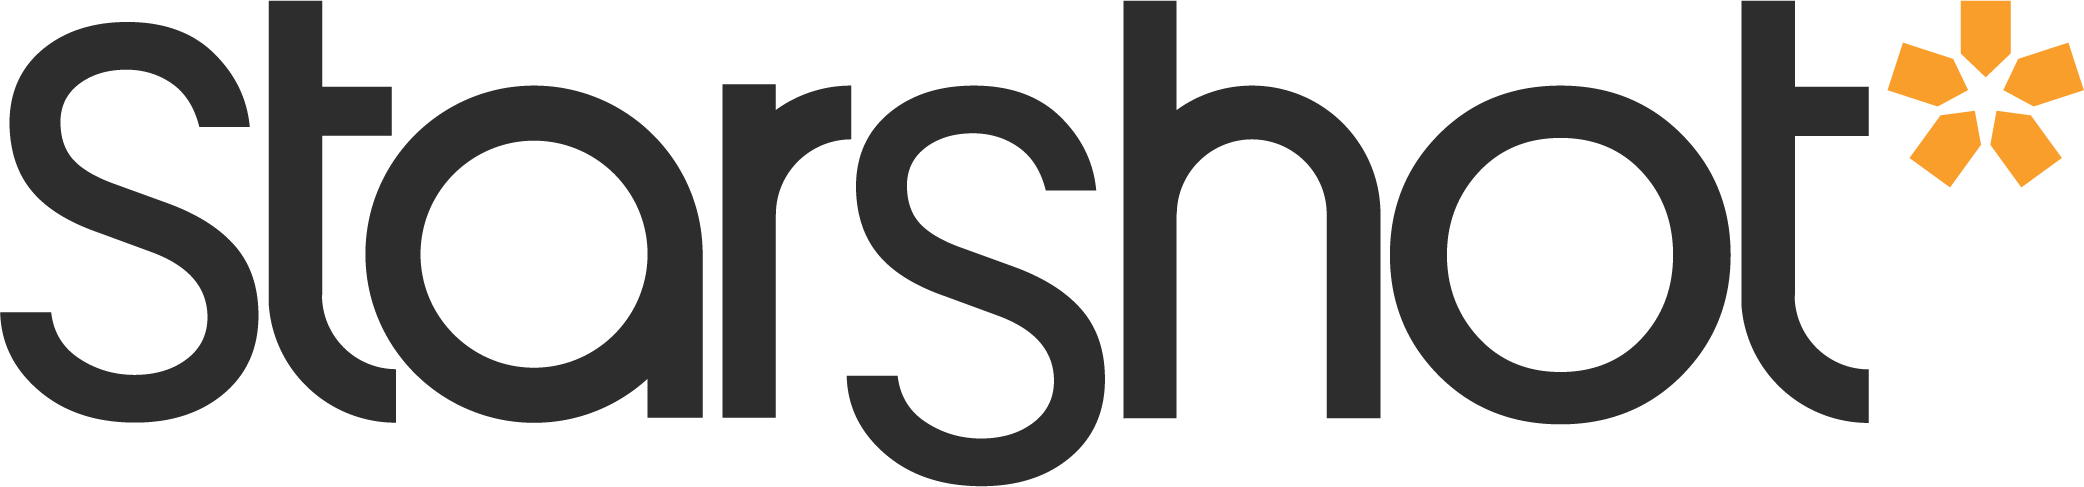 Starshot logo colour